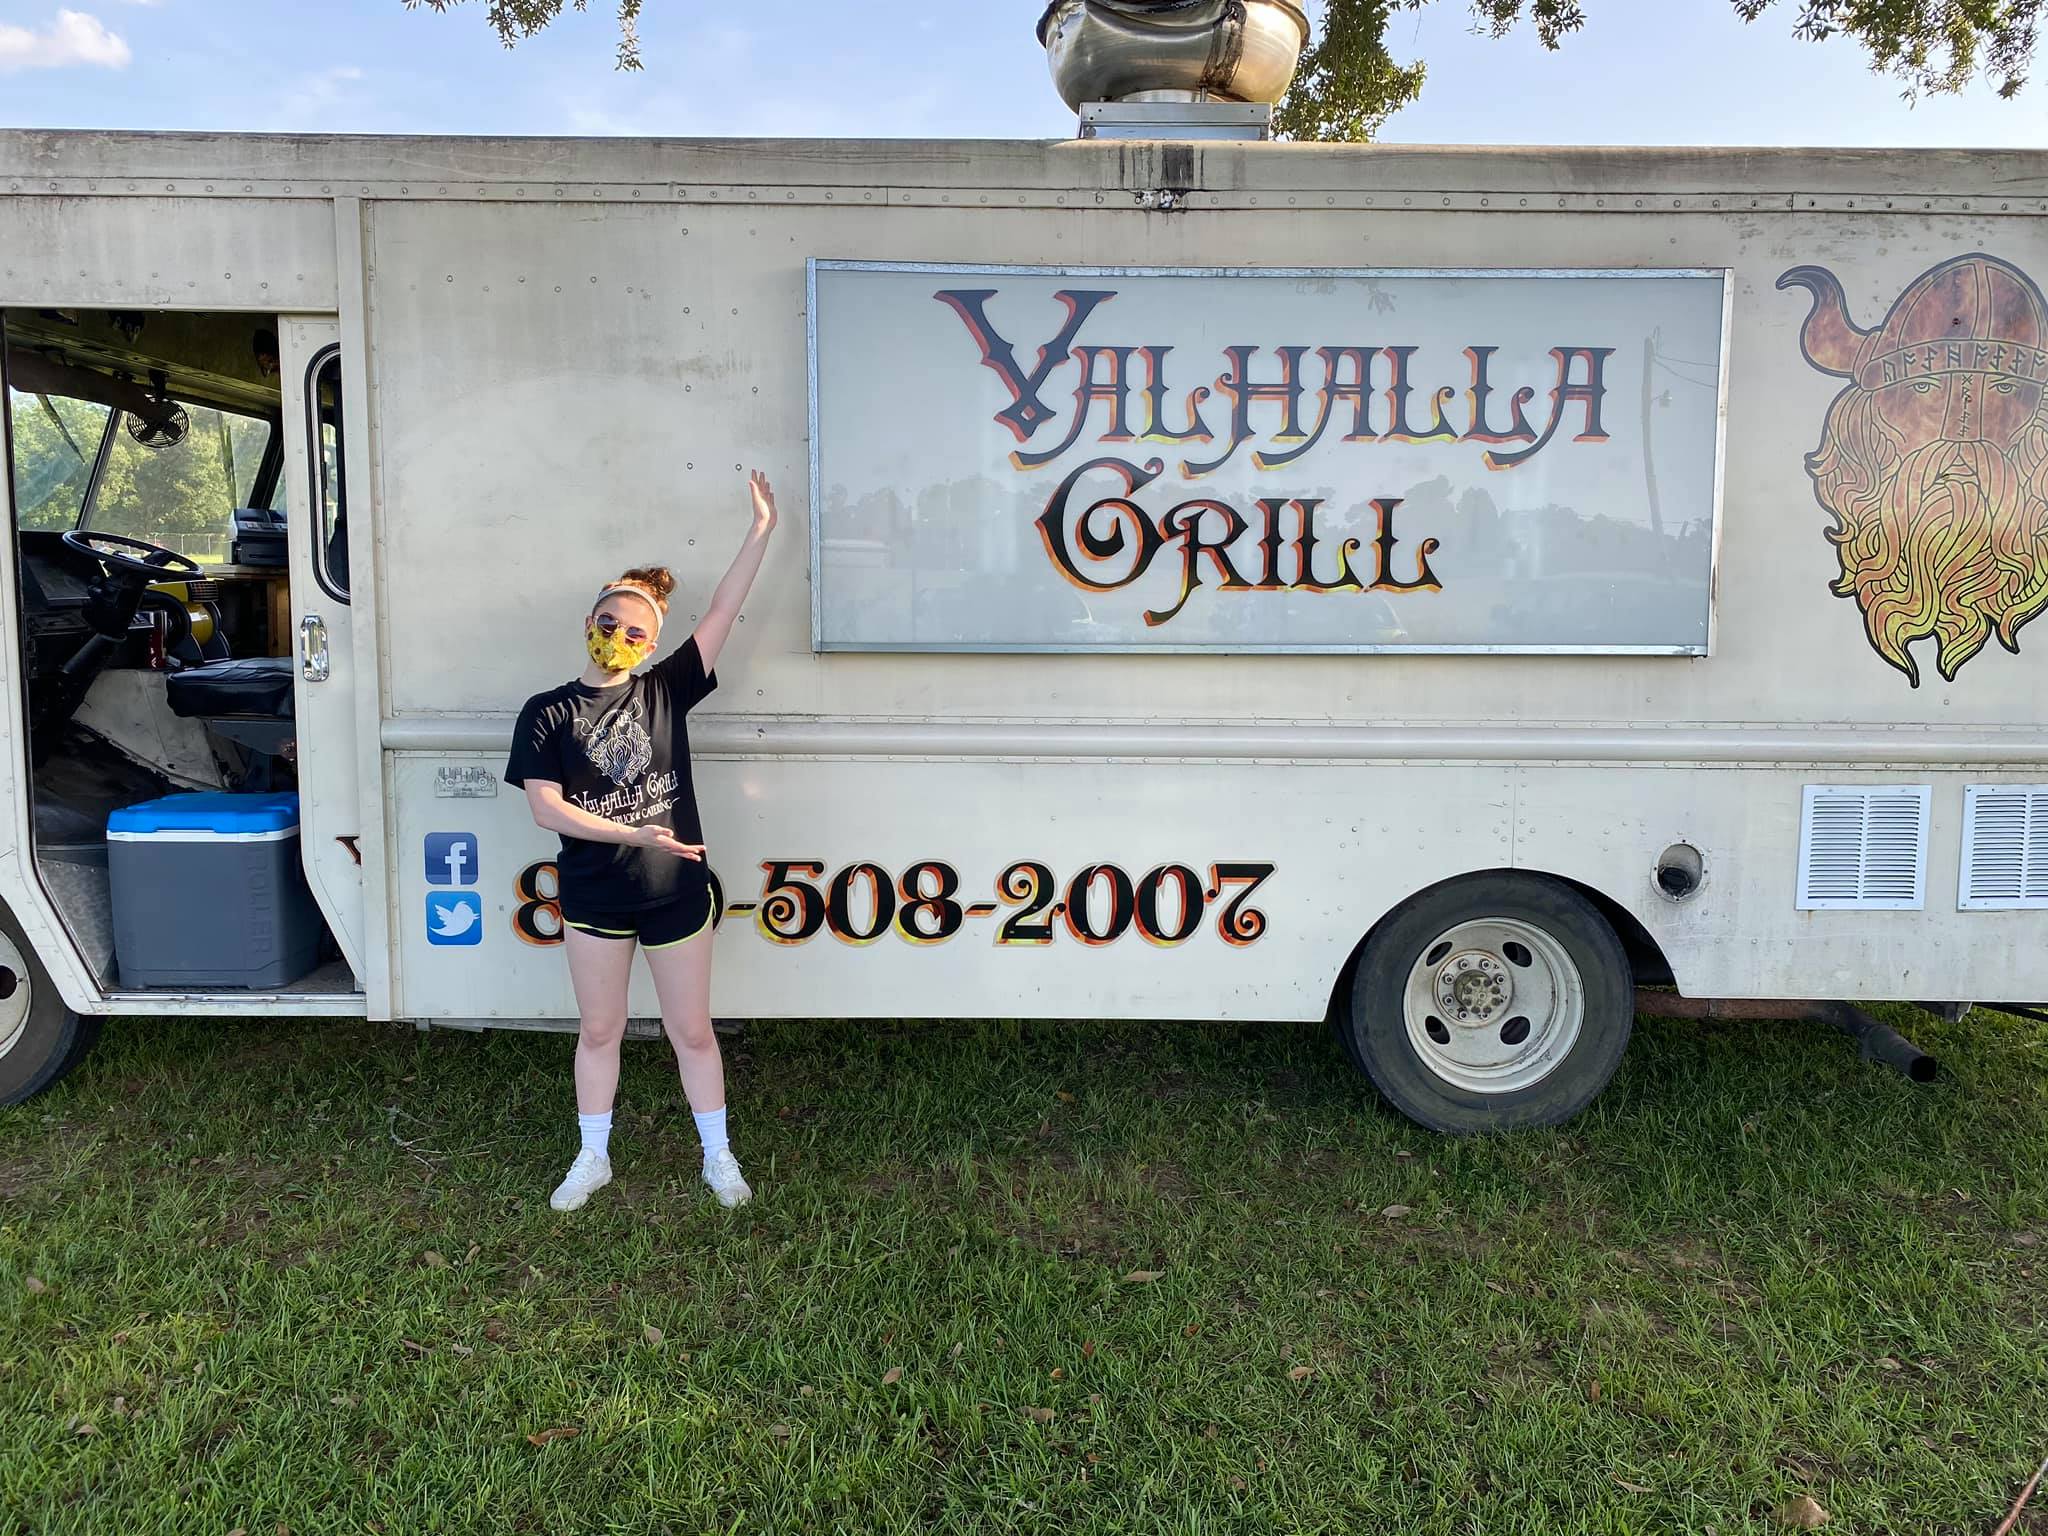 Valhalla grill food truck